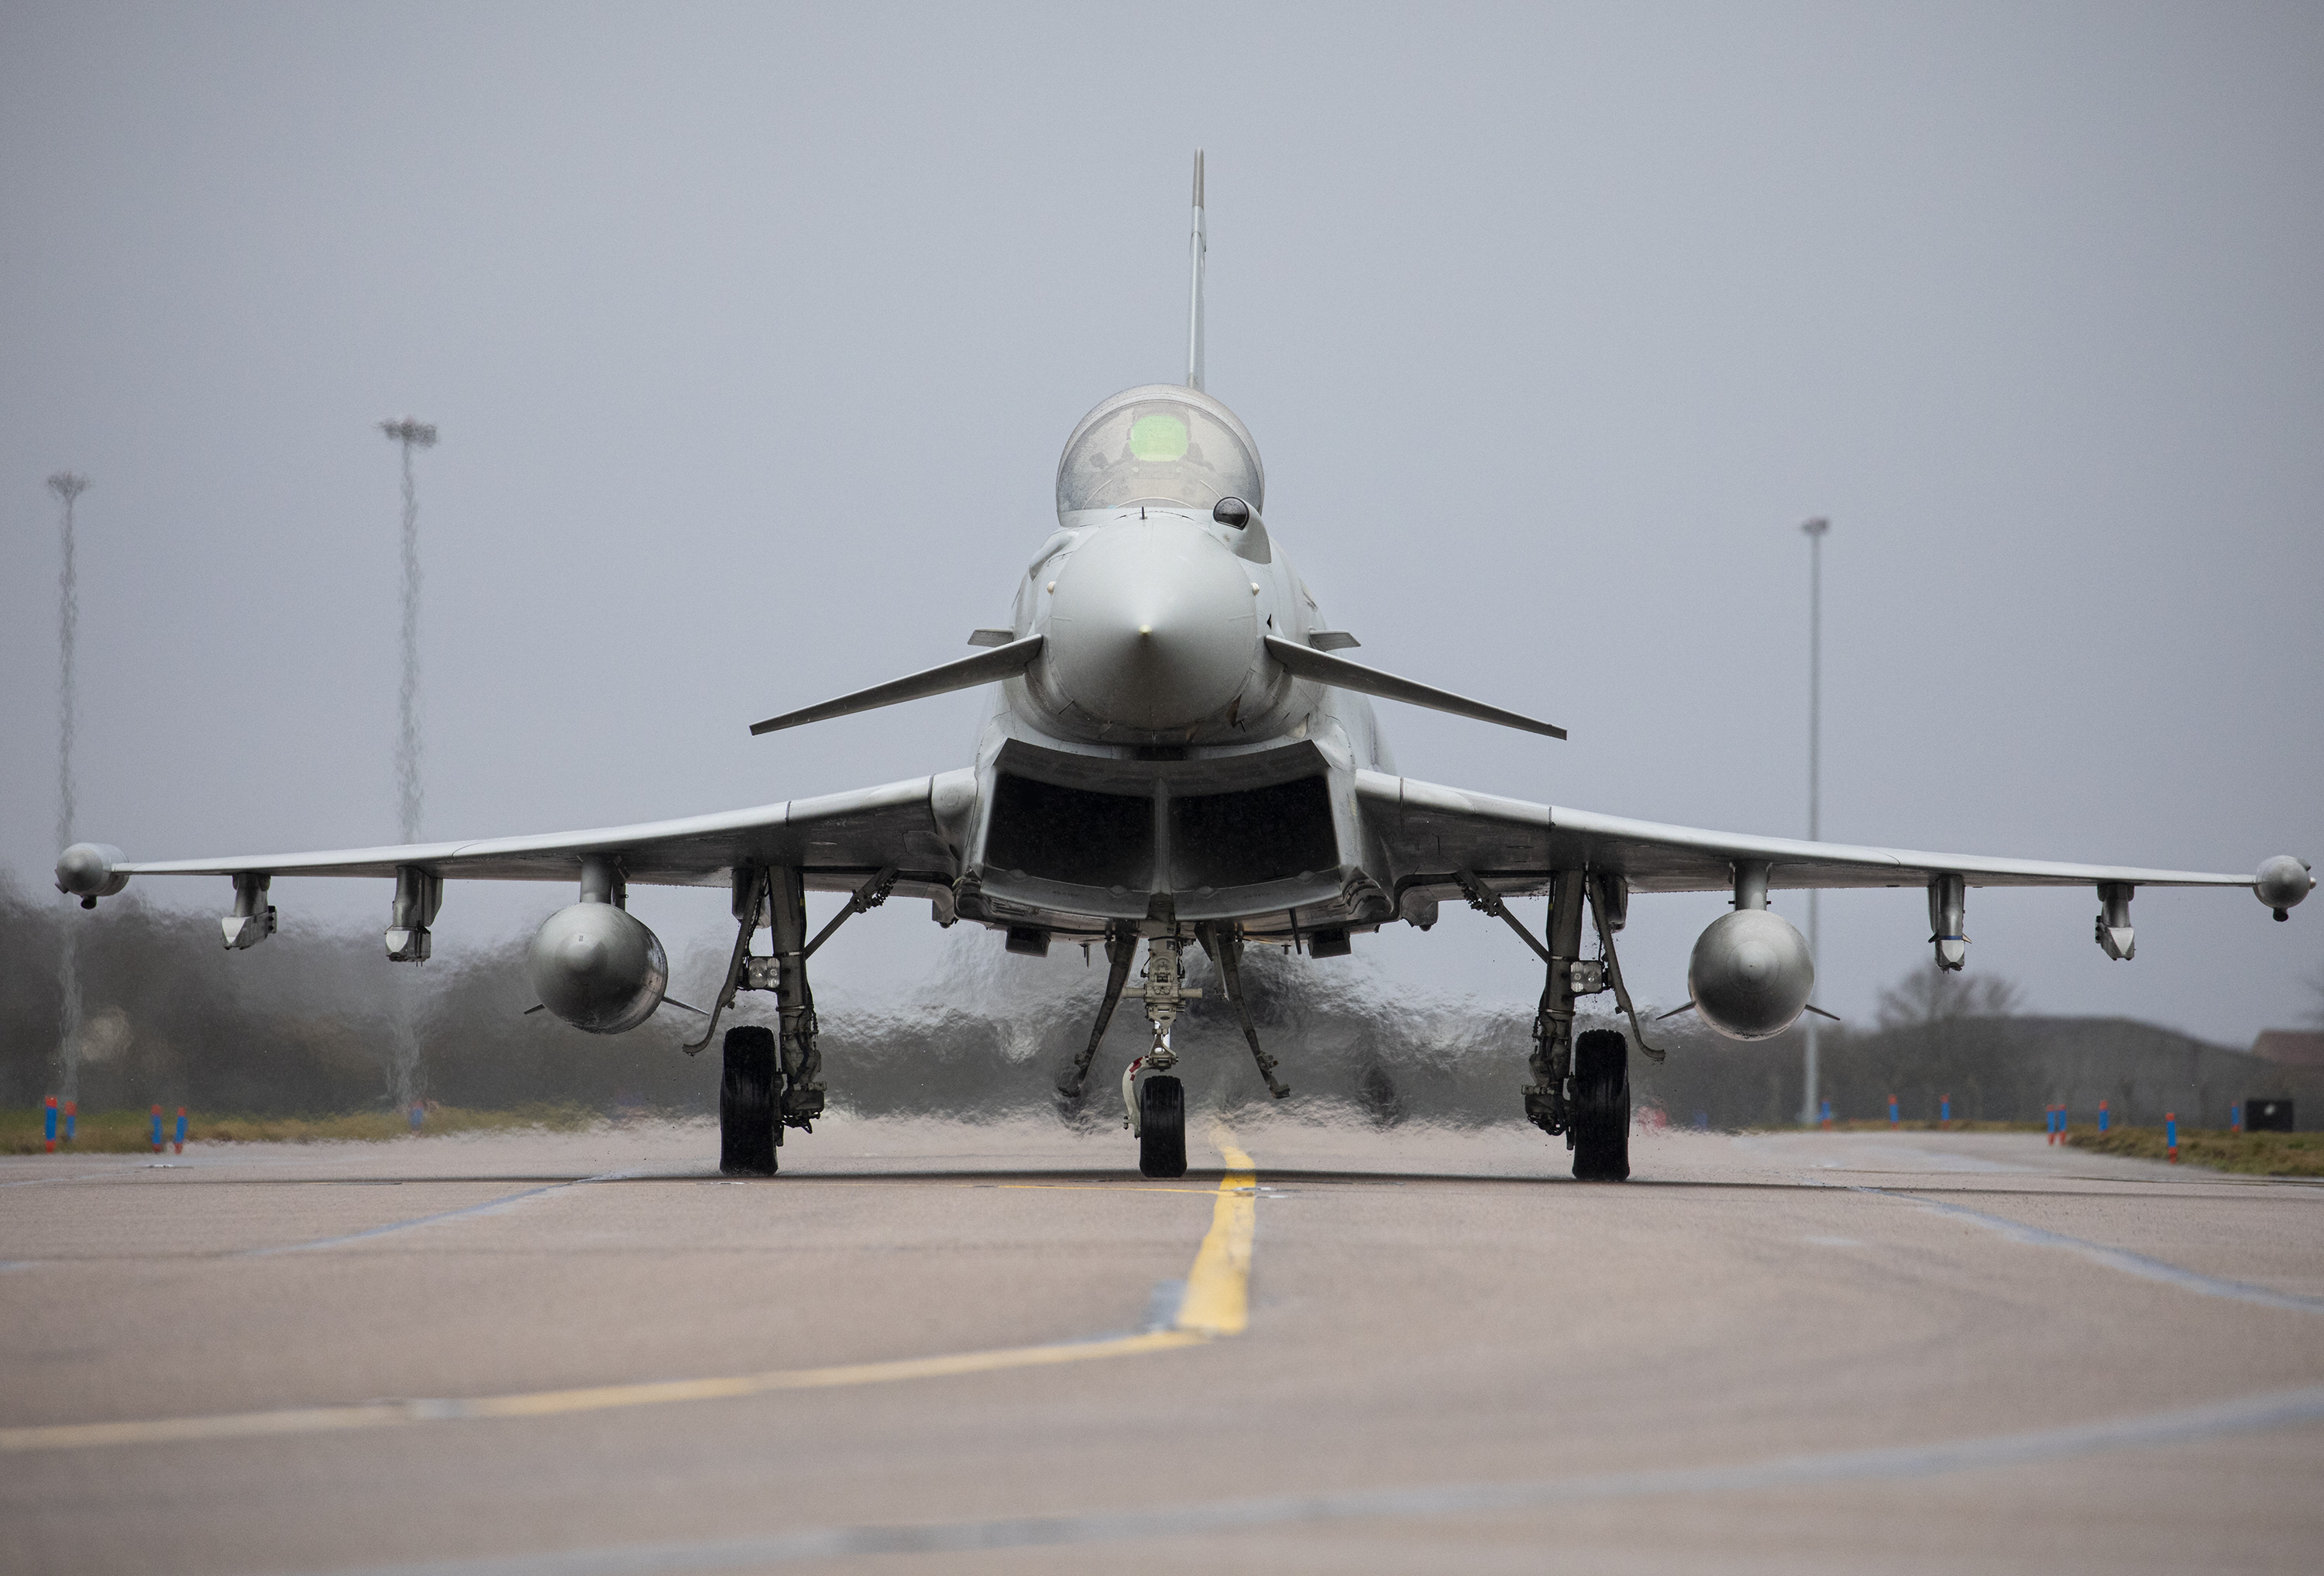 Typhoon on the runway.